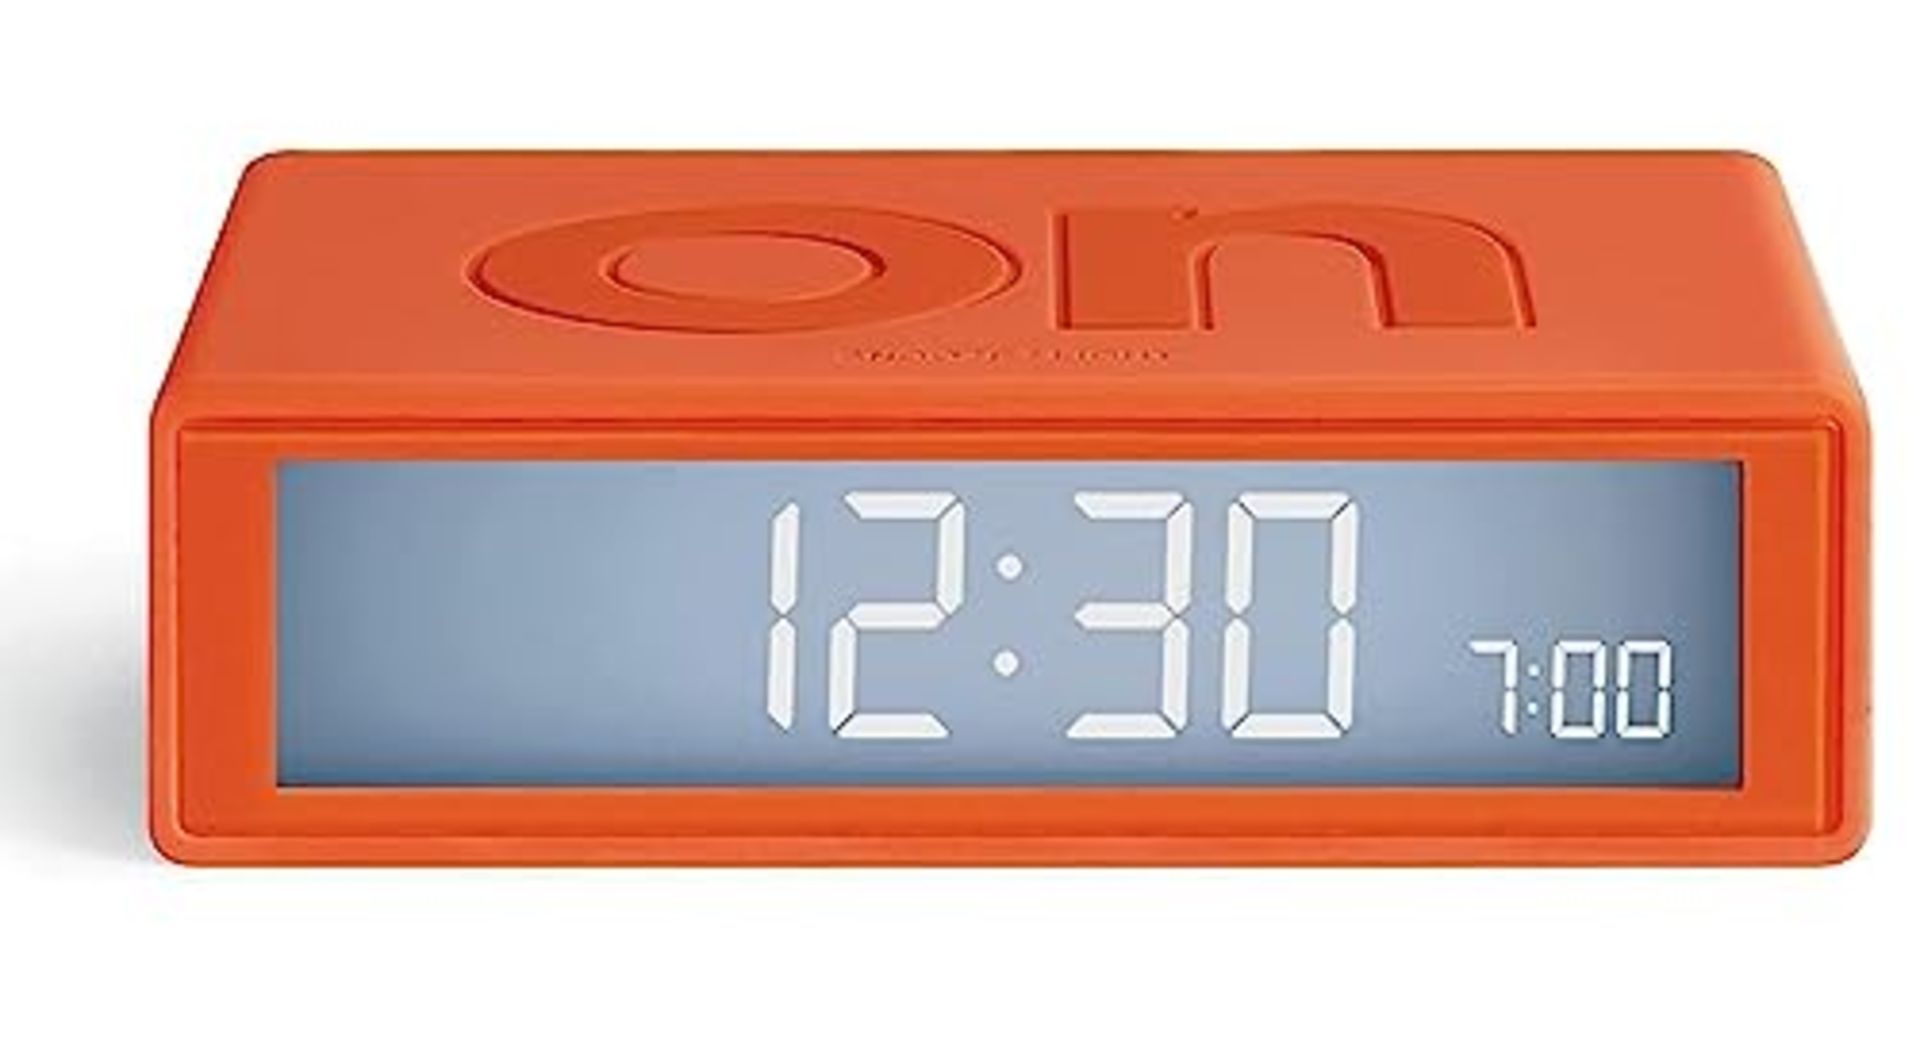 Lexon Flip Plus LR151O1 Travel Alarm Clock with LCD Display, Aluminum, Glossy, 10.4 x